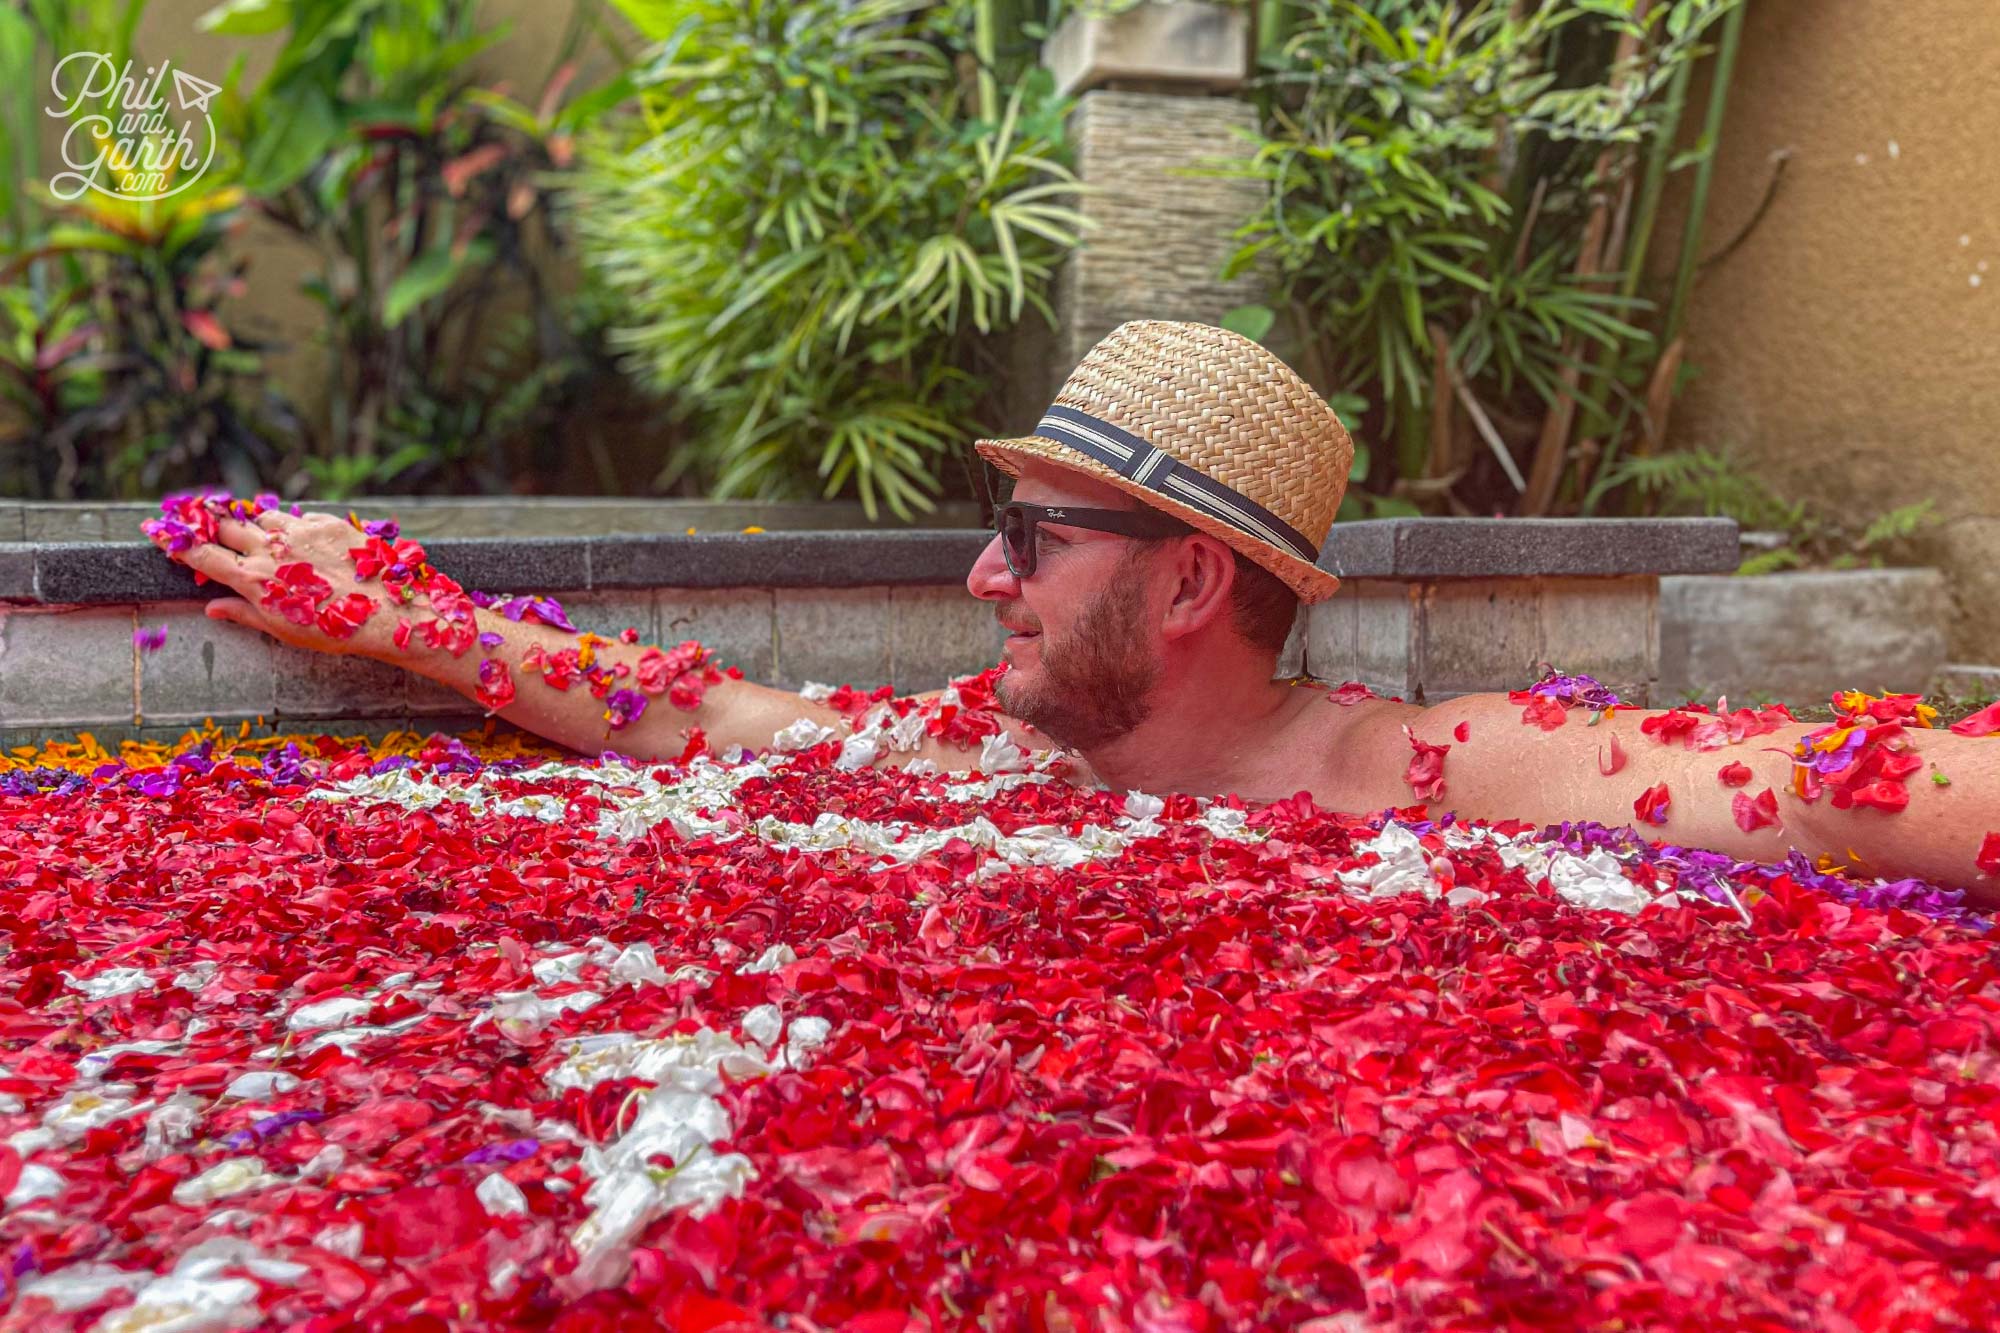 What's it like to swim in a Bali flower pool?